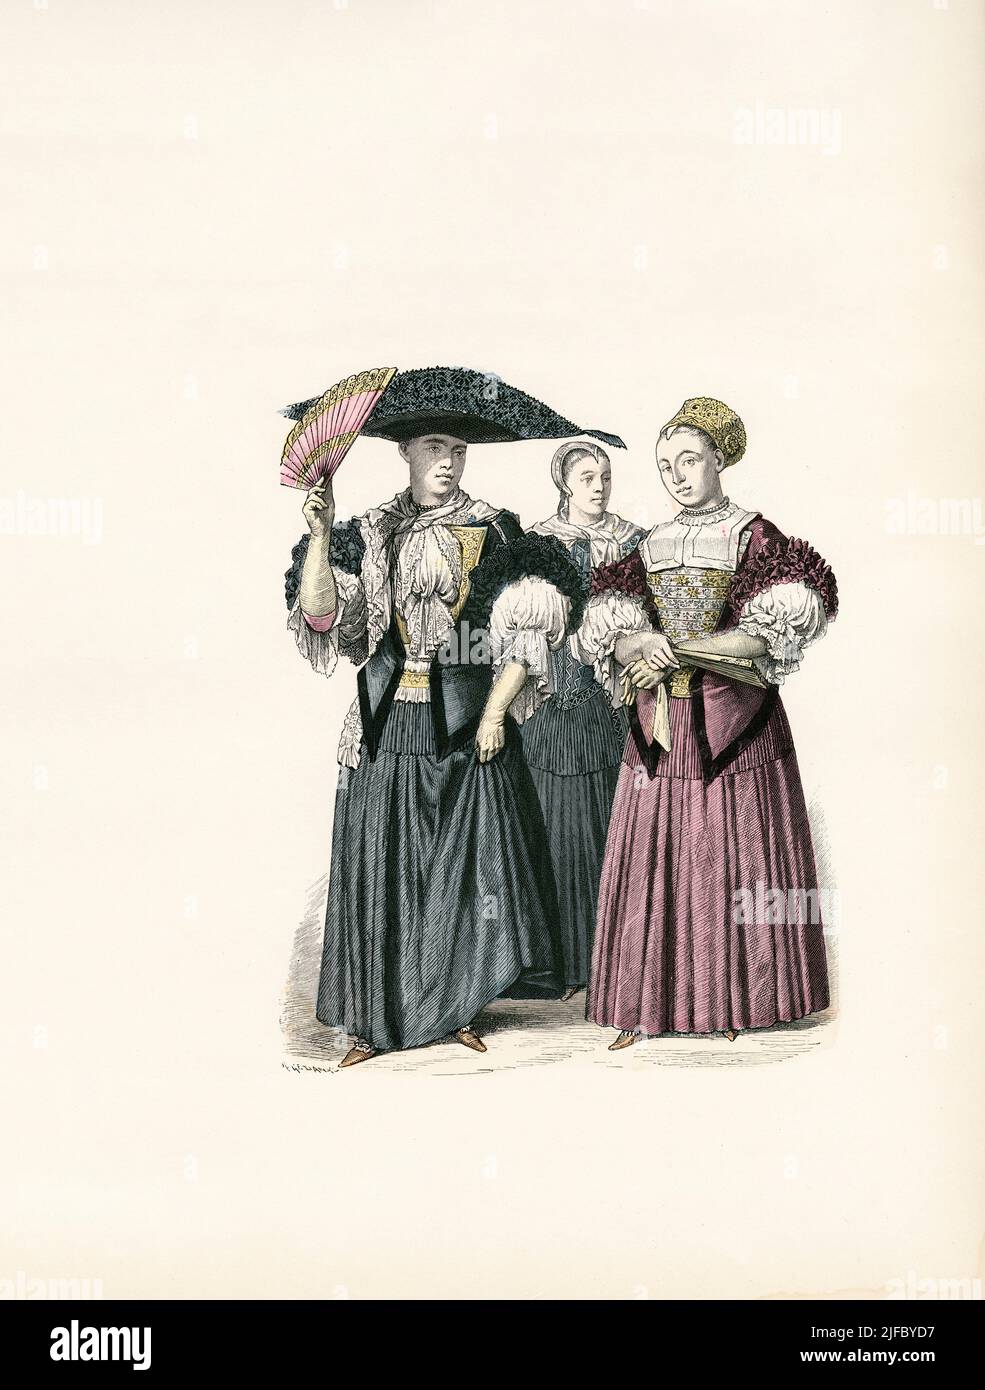 Girls, Bride (1670-1690), Strasbourg, 17th Century, Illustration, The History of Costume, Braun & Schneider, Munich, Germany, 1861-1880 Stock Photo